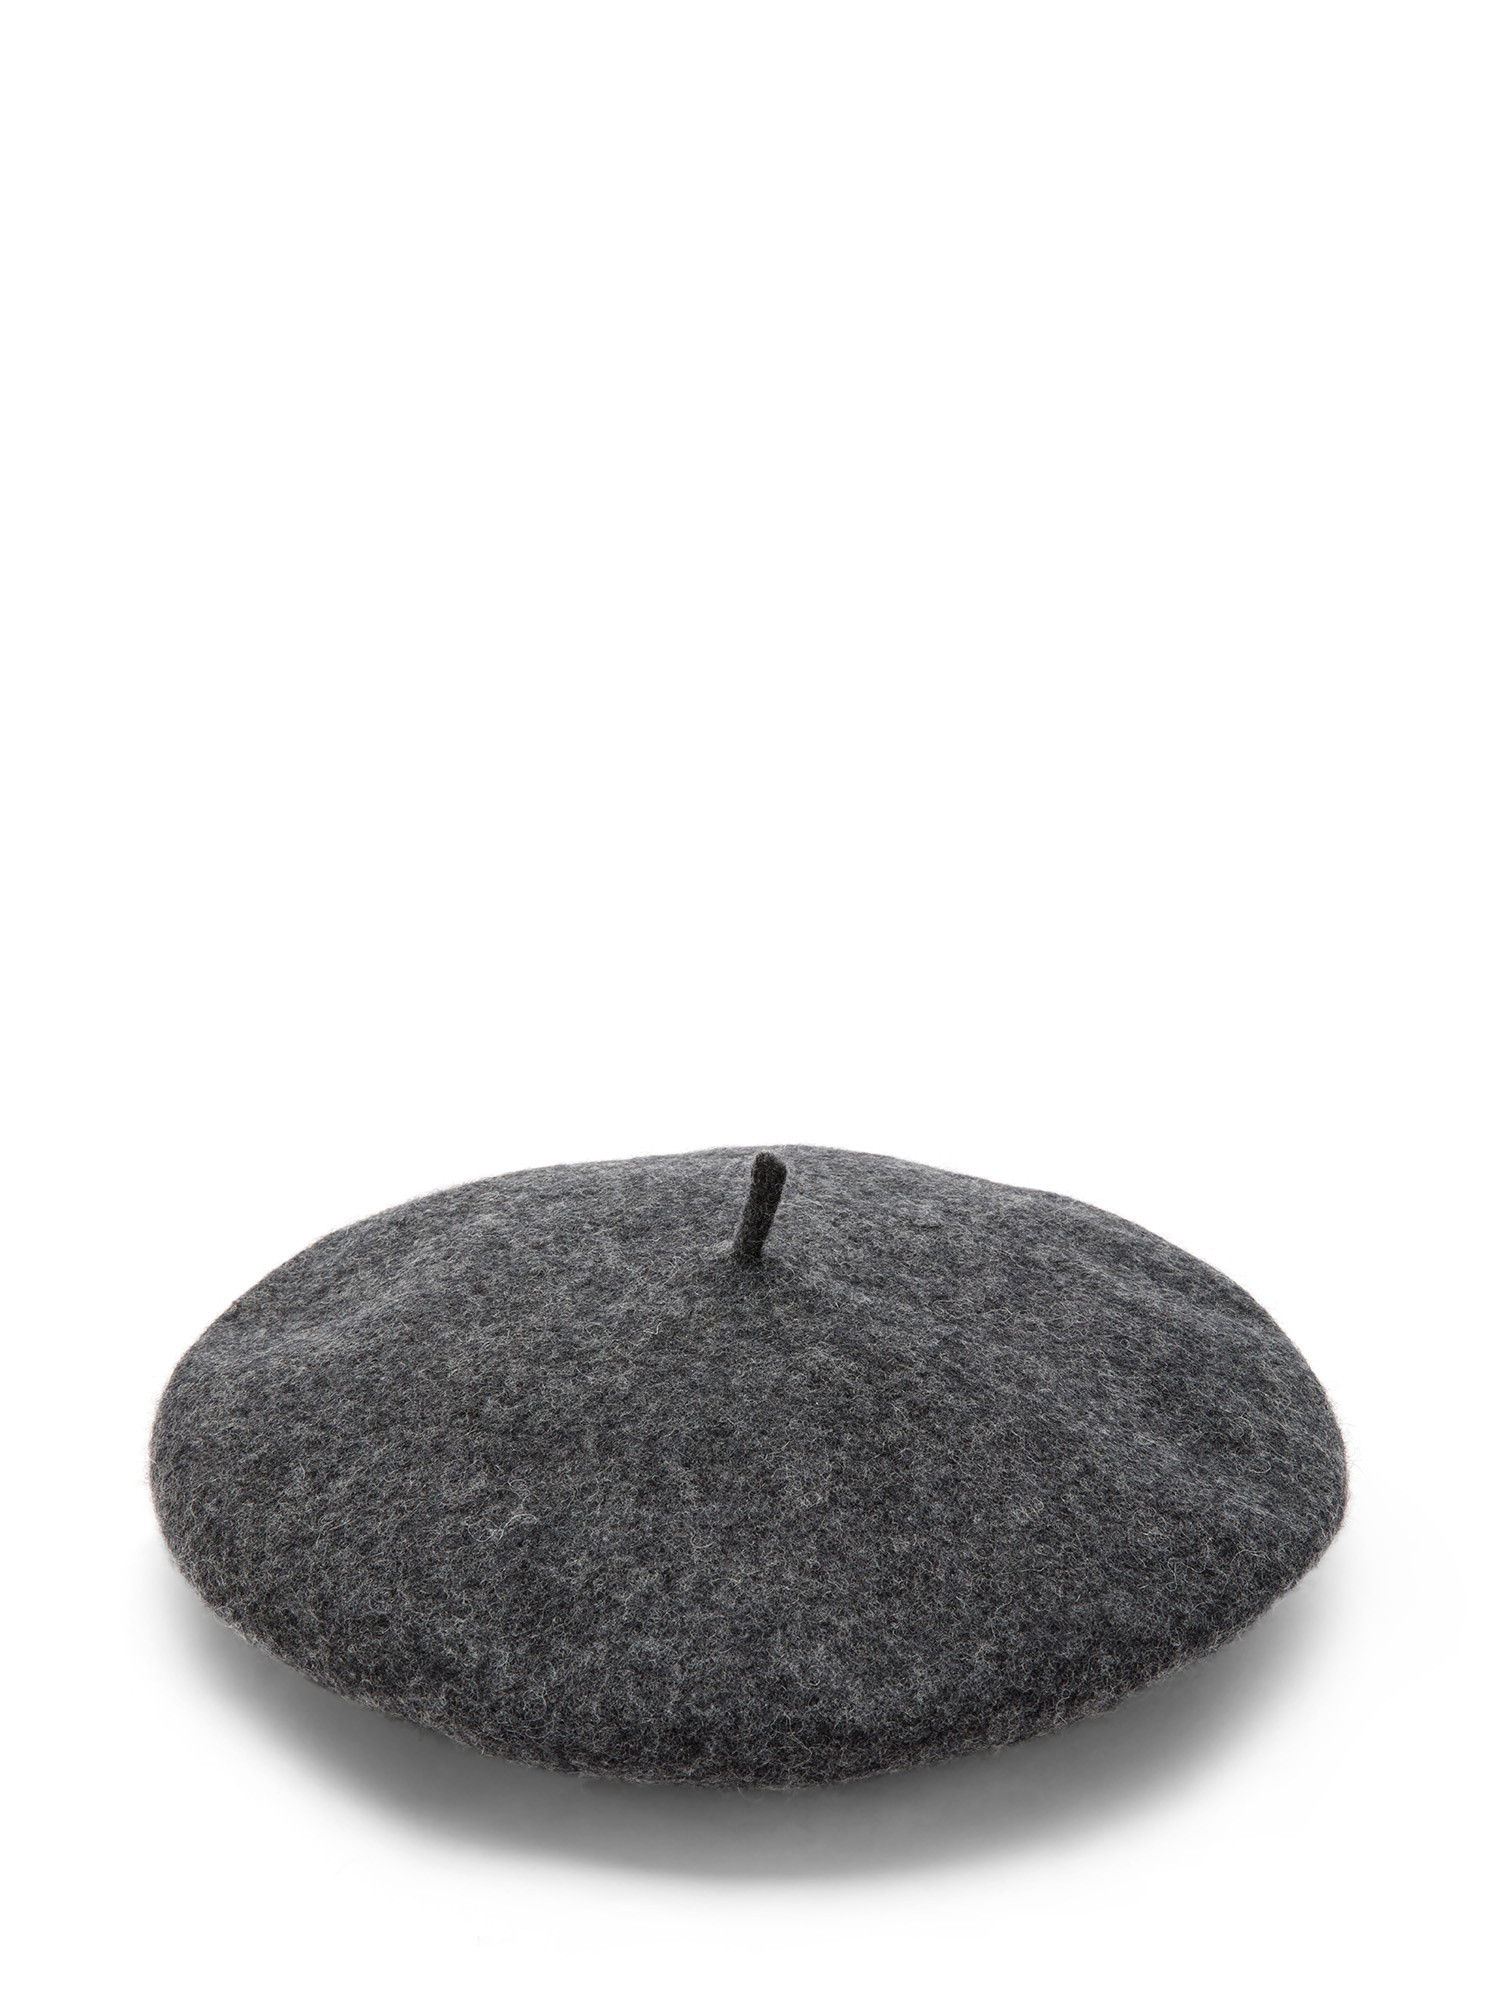 Koan - Pure wool beret, Dark Grey, large image number 0